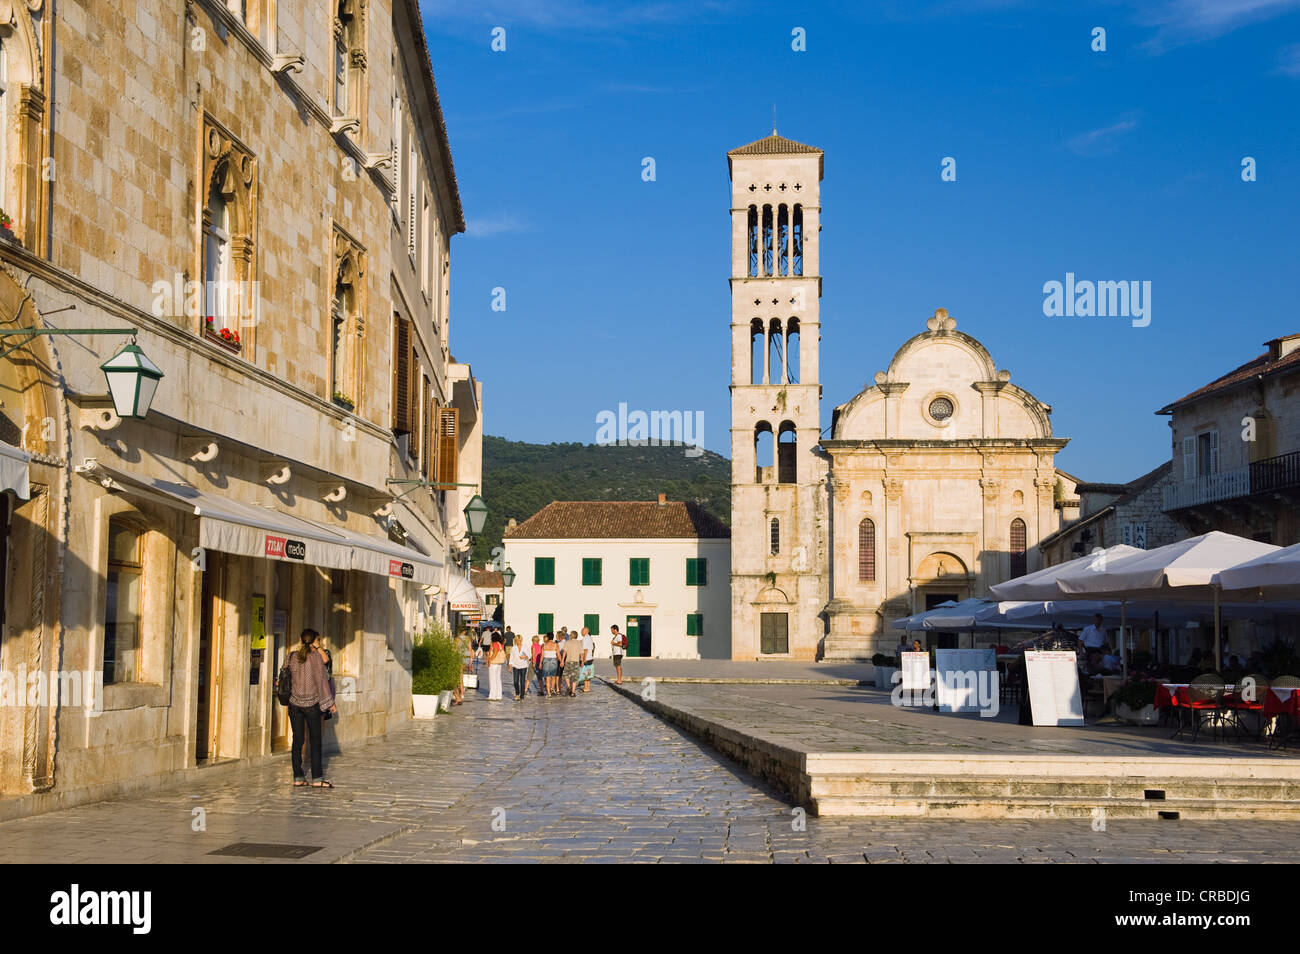 St. Stephen's Square, Sveti Stjepan Cathedral, town of Hvar, Hvar Island, Dalmatia, Croatia, Europe Stock Photo